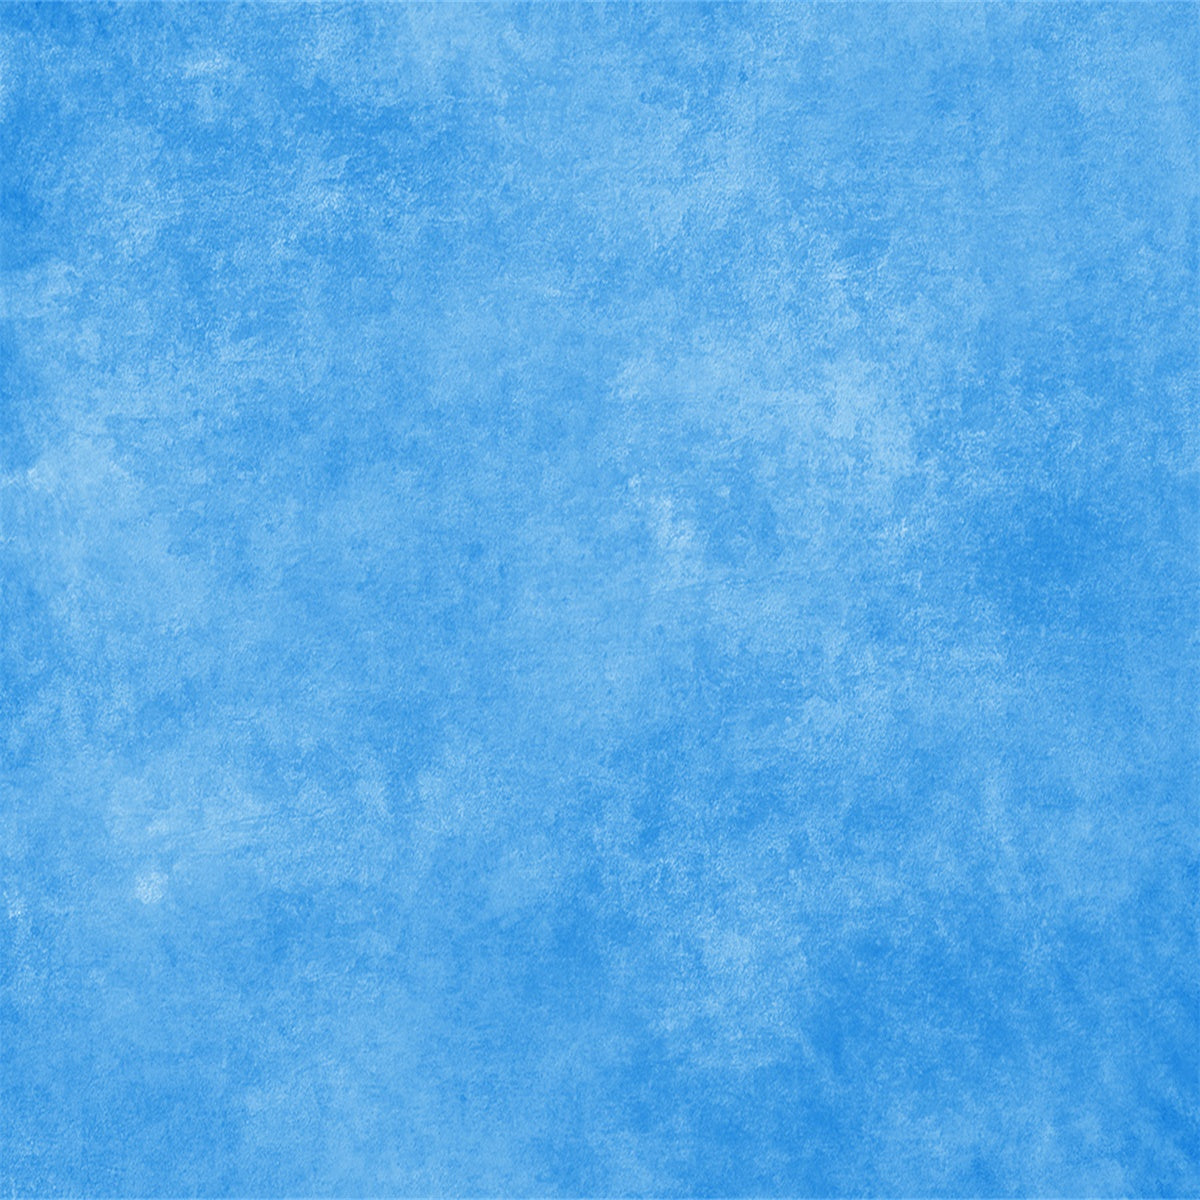 Deep Blue Sky Pattern Abstract Photo Backdrop